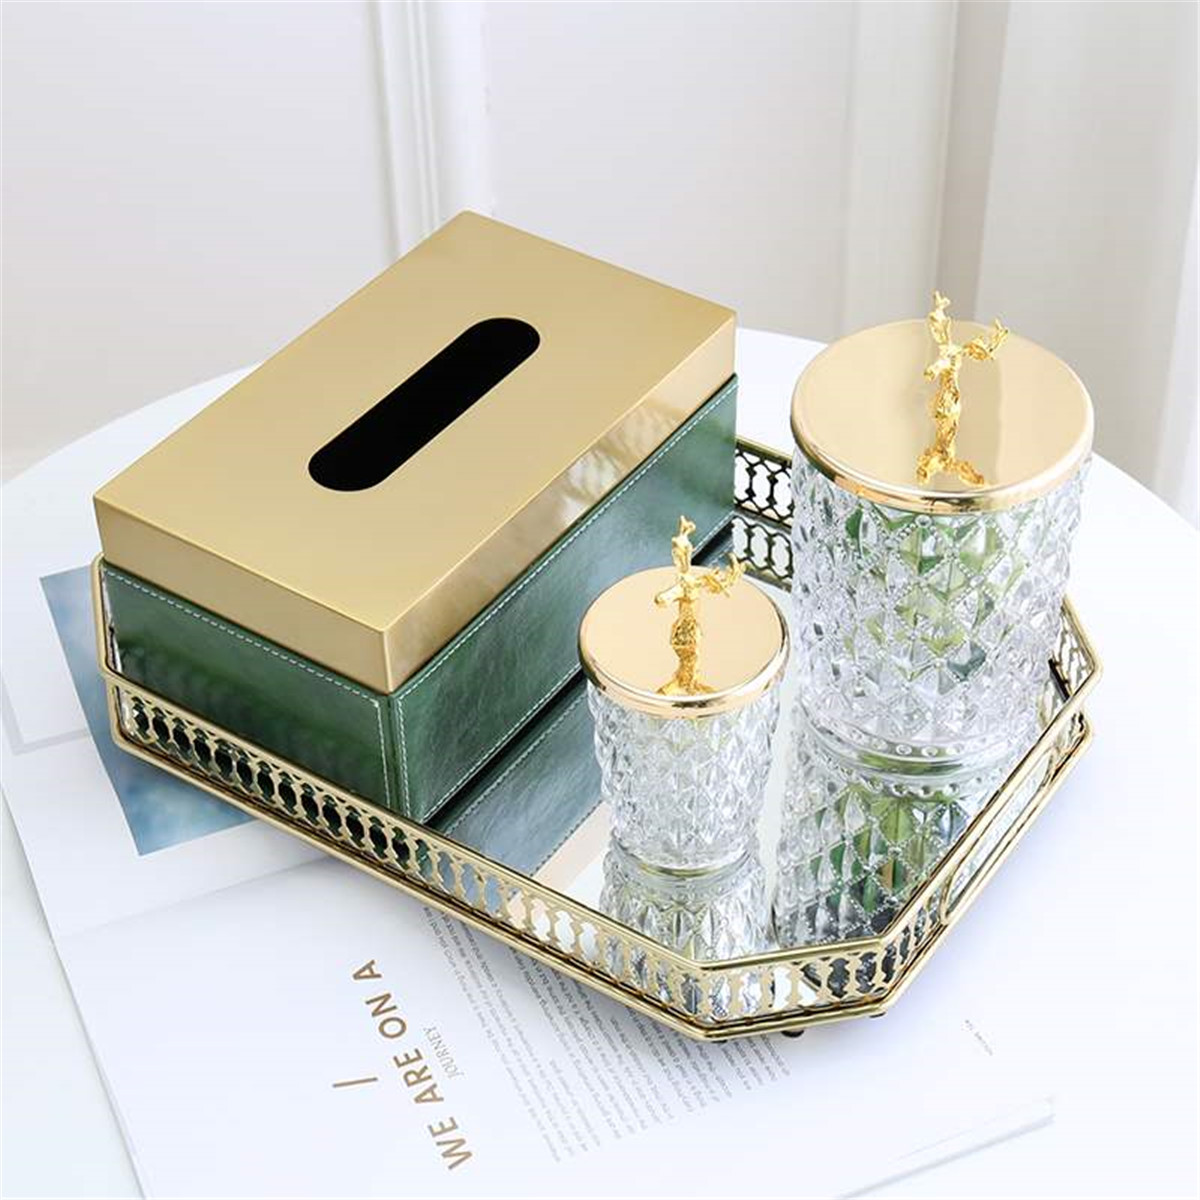 European Mirror Storage Tray Gold Iron Serving Tray Jewelry Organizer Home Office Storage Holder Baskets Decoration Round/Square